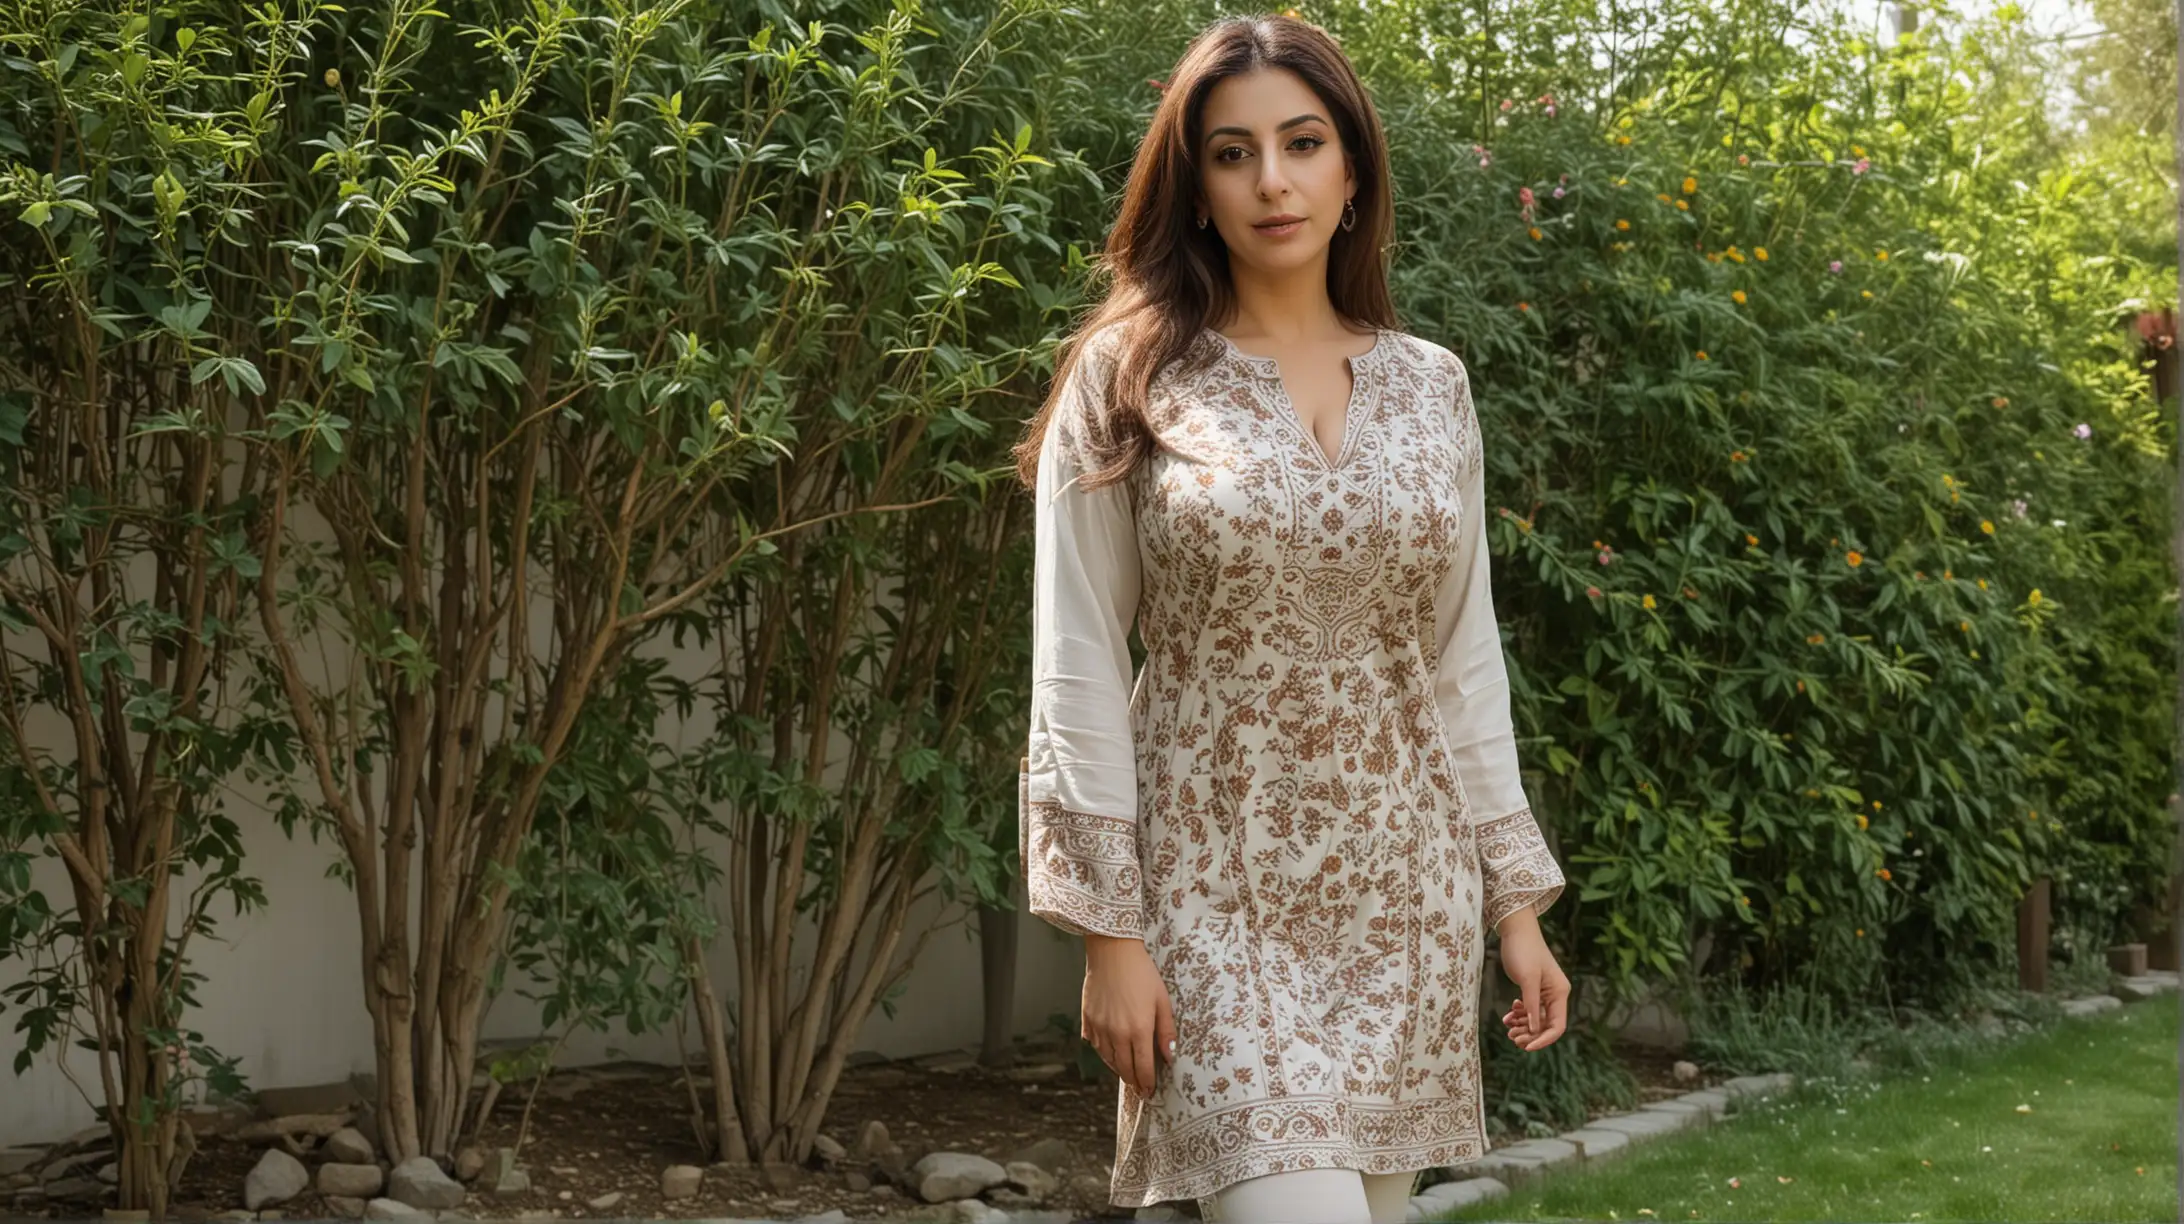 Elegant Iranian Woman in a Serene Garden Setting